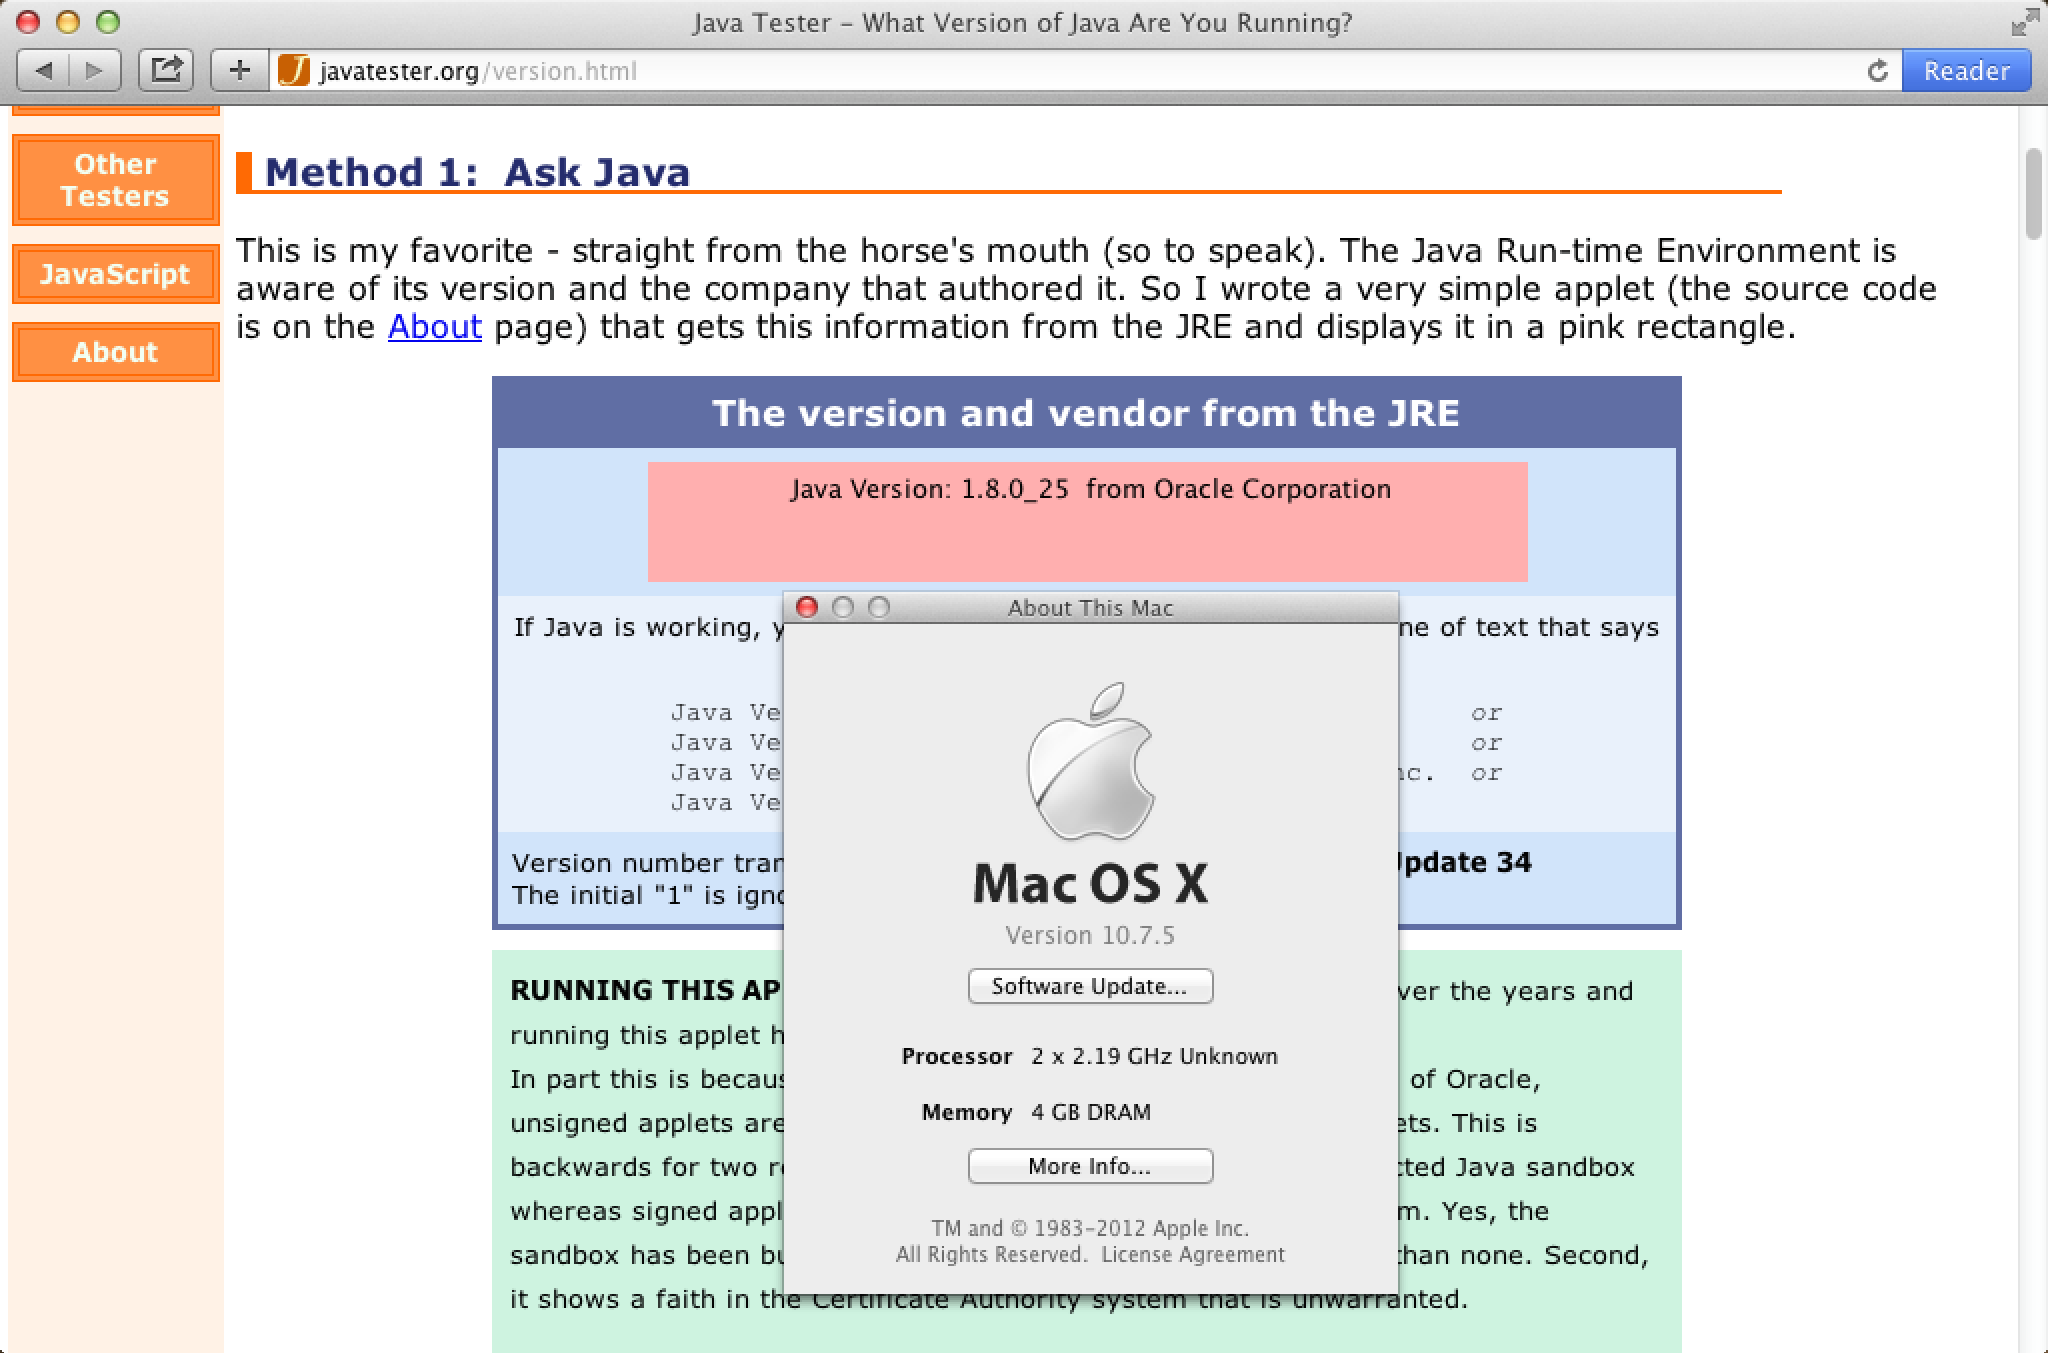 java jdk 1.6 free download for mac os x